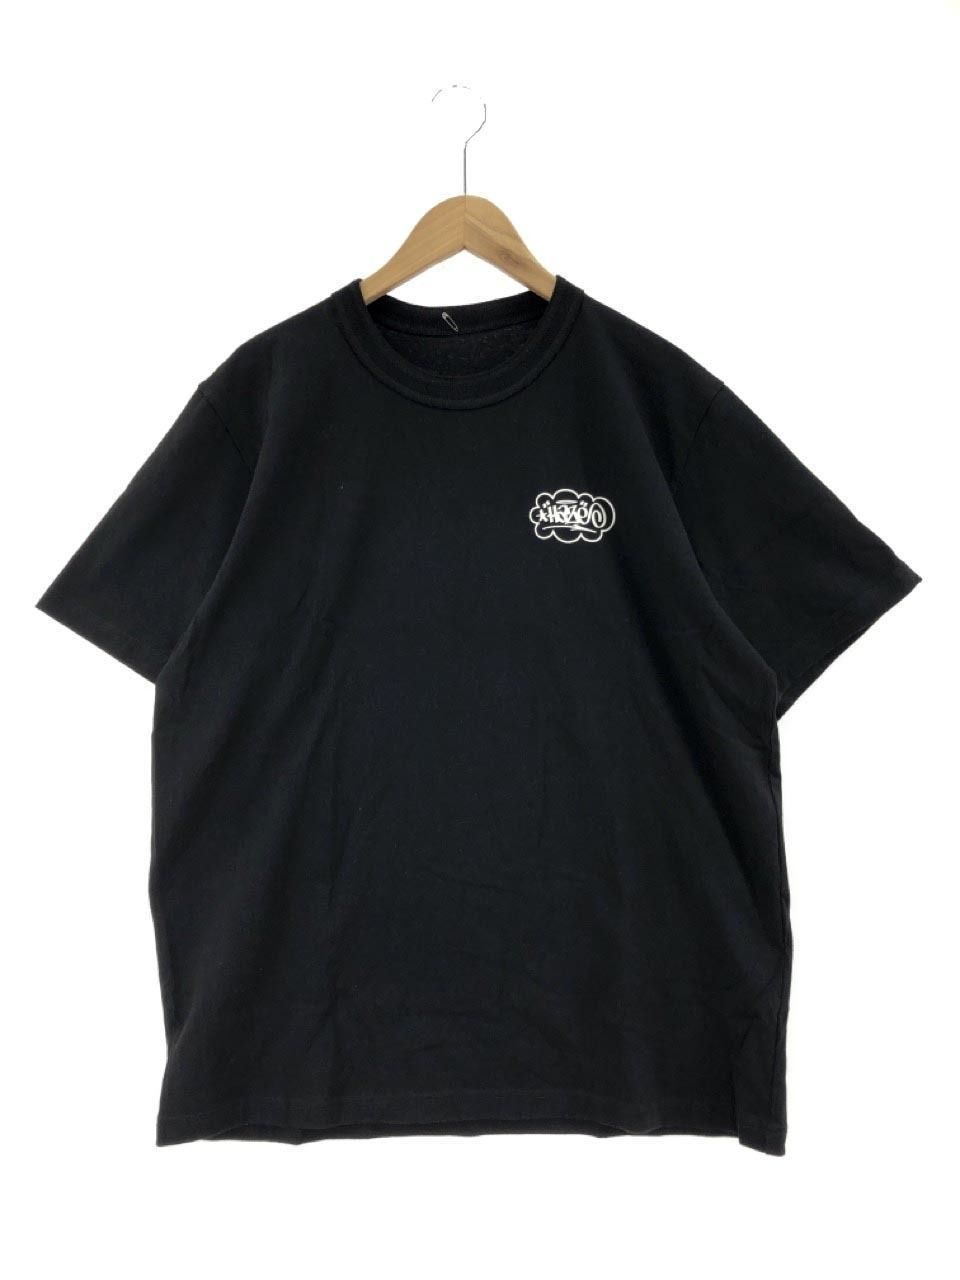 Sacai Eric Haze Circle Star T-shirt 5 ブラック - メルカリ